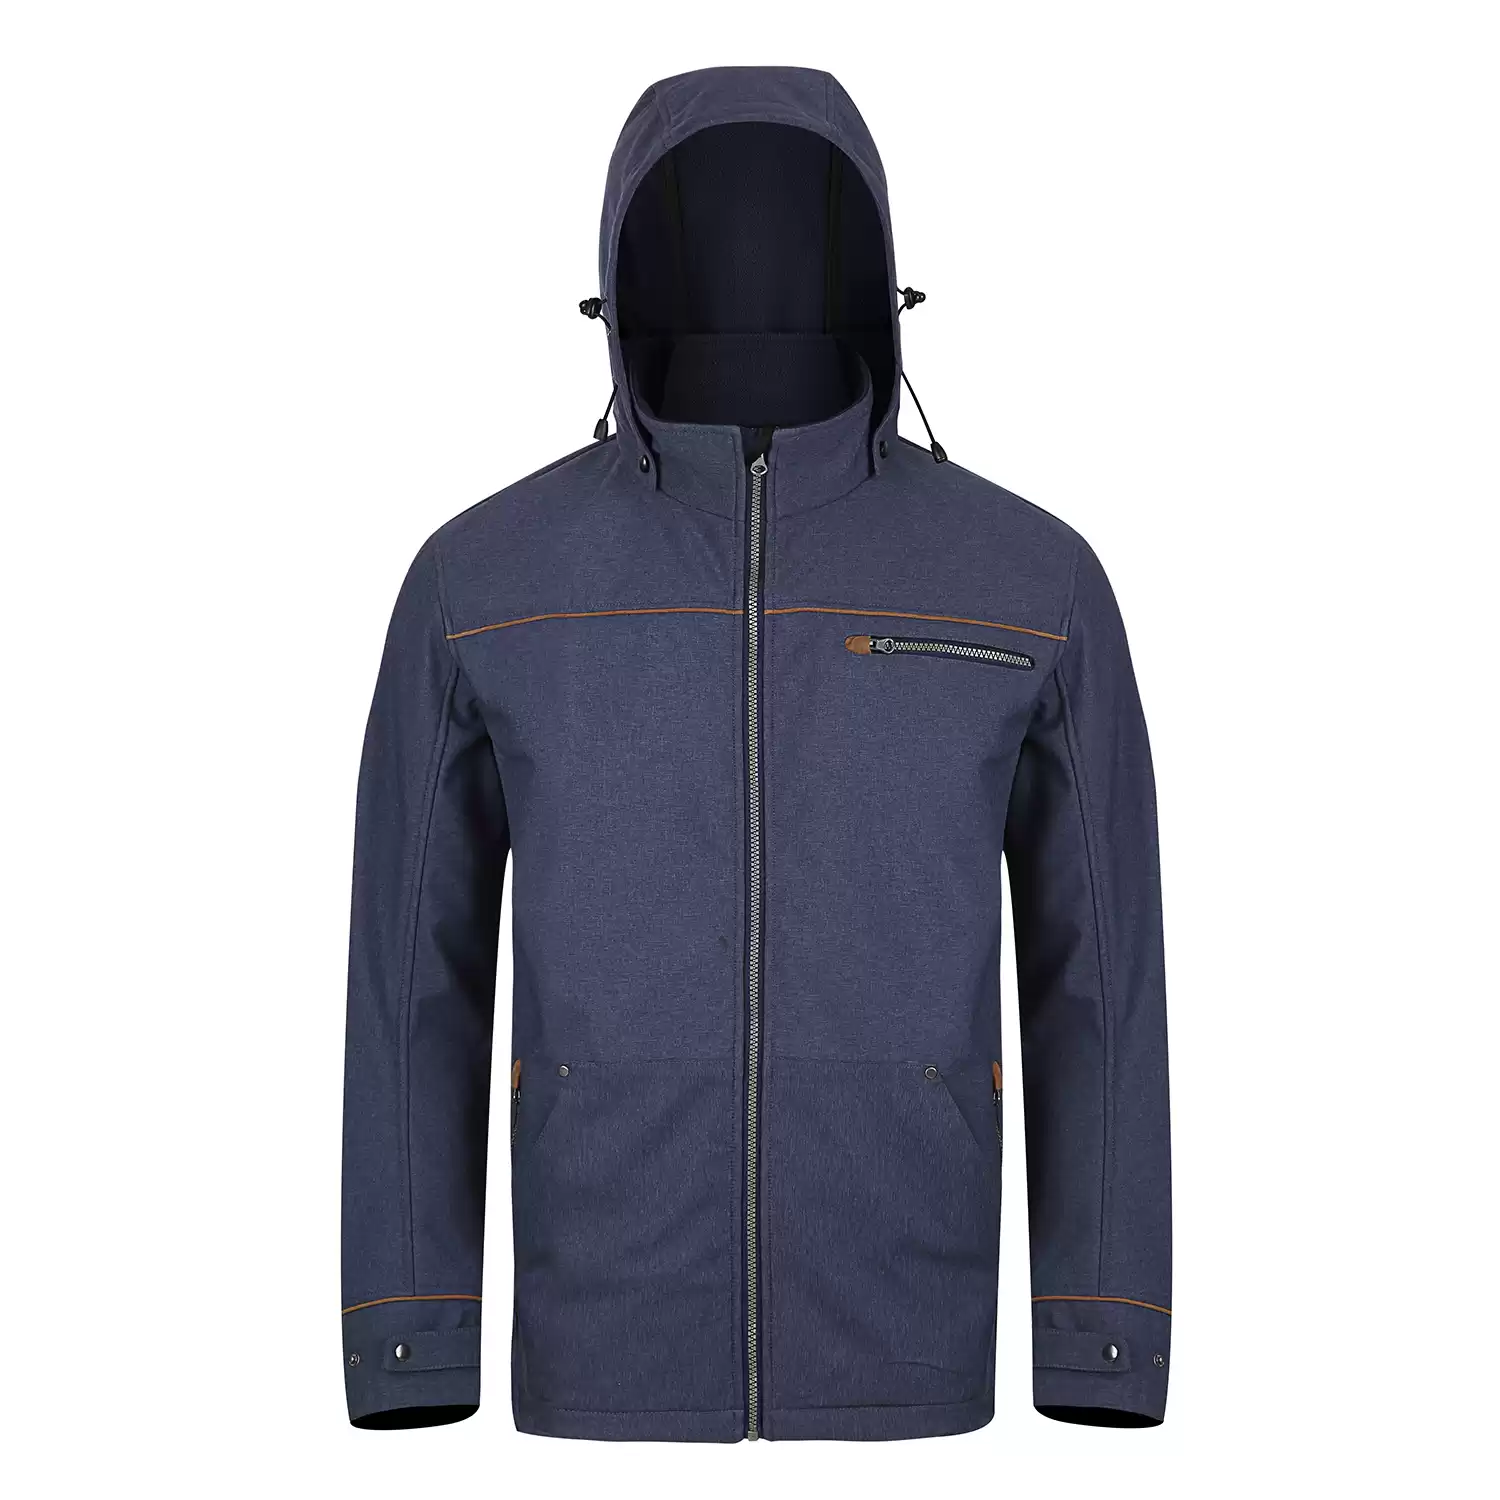 Waterproof softshell jacket for Men with fleece lining